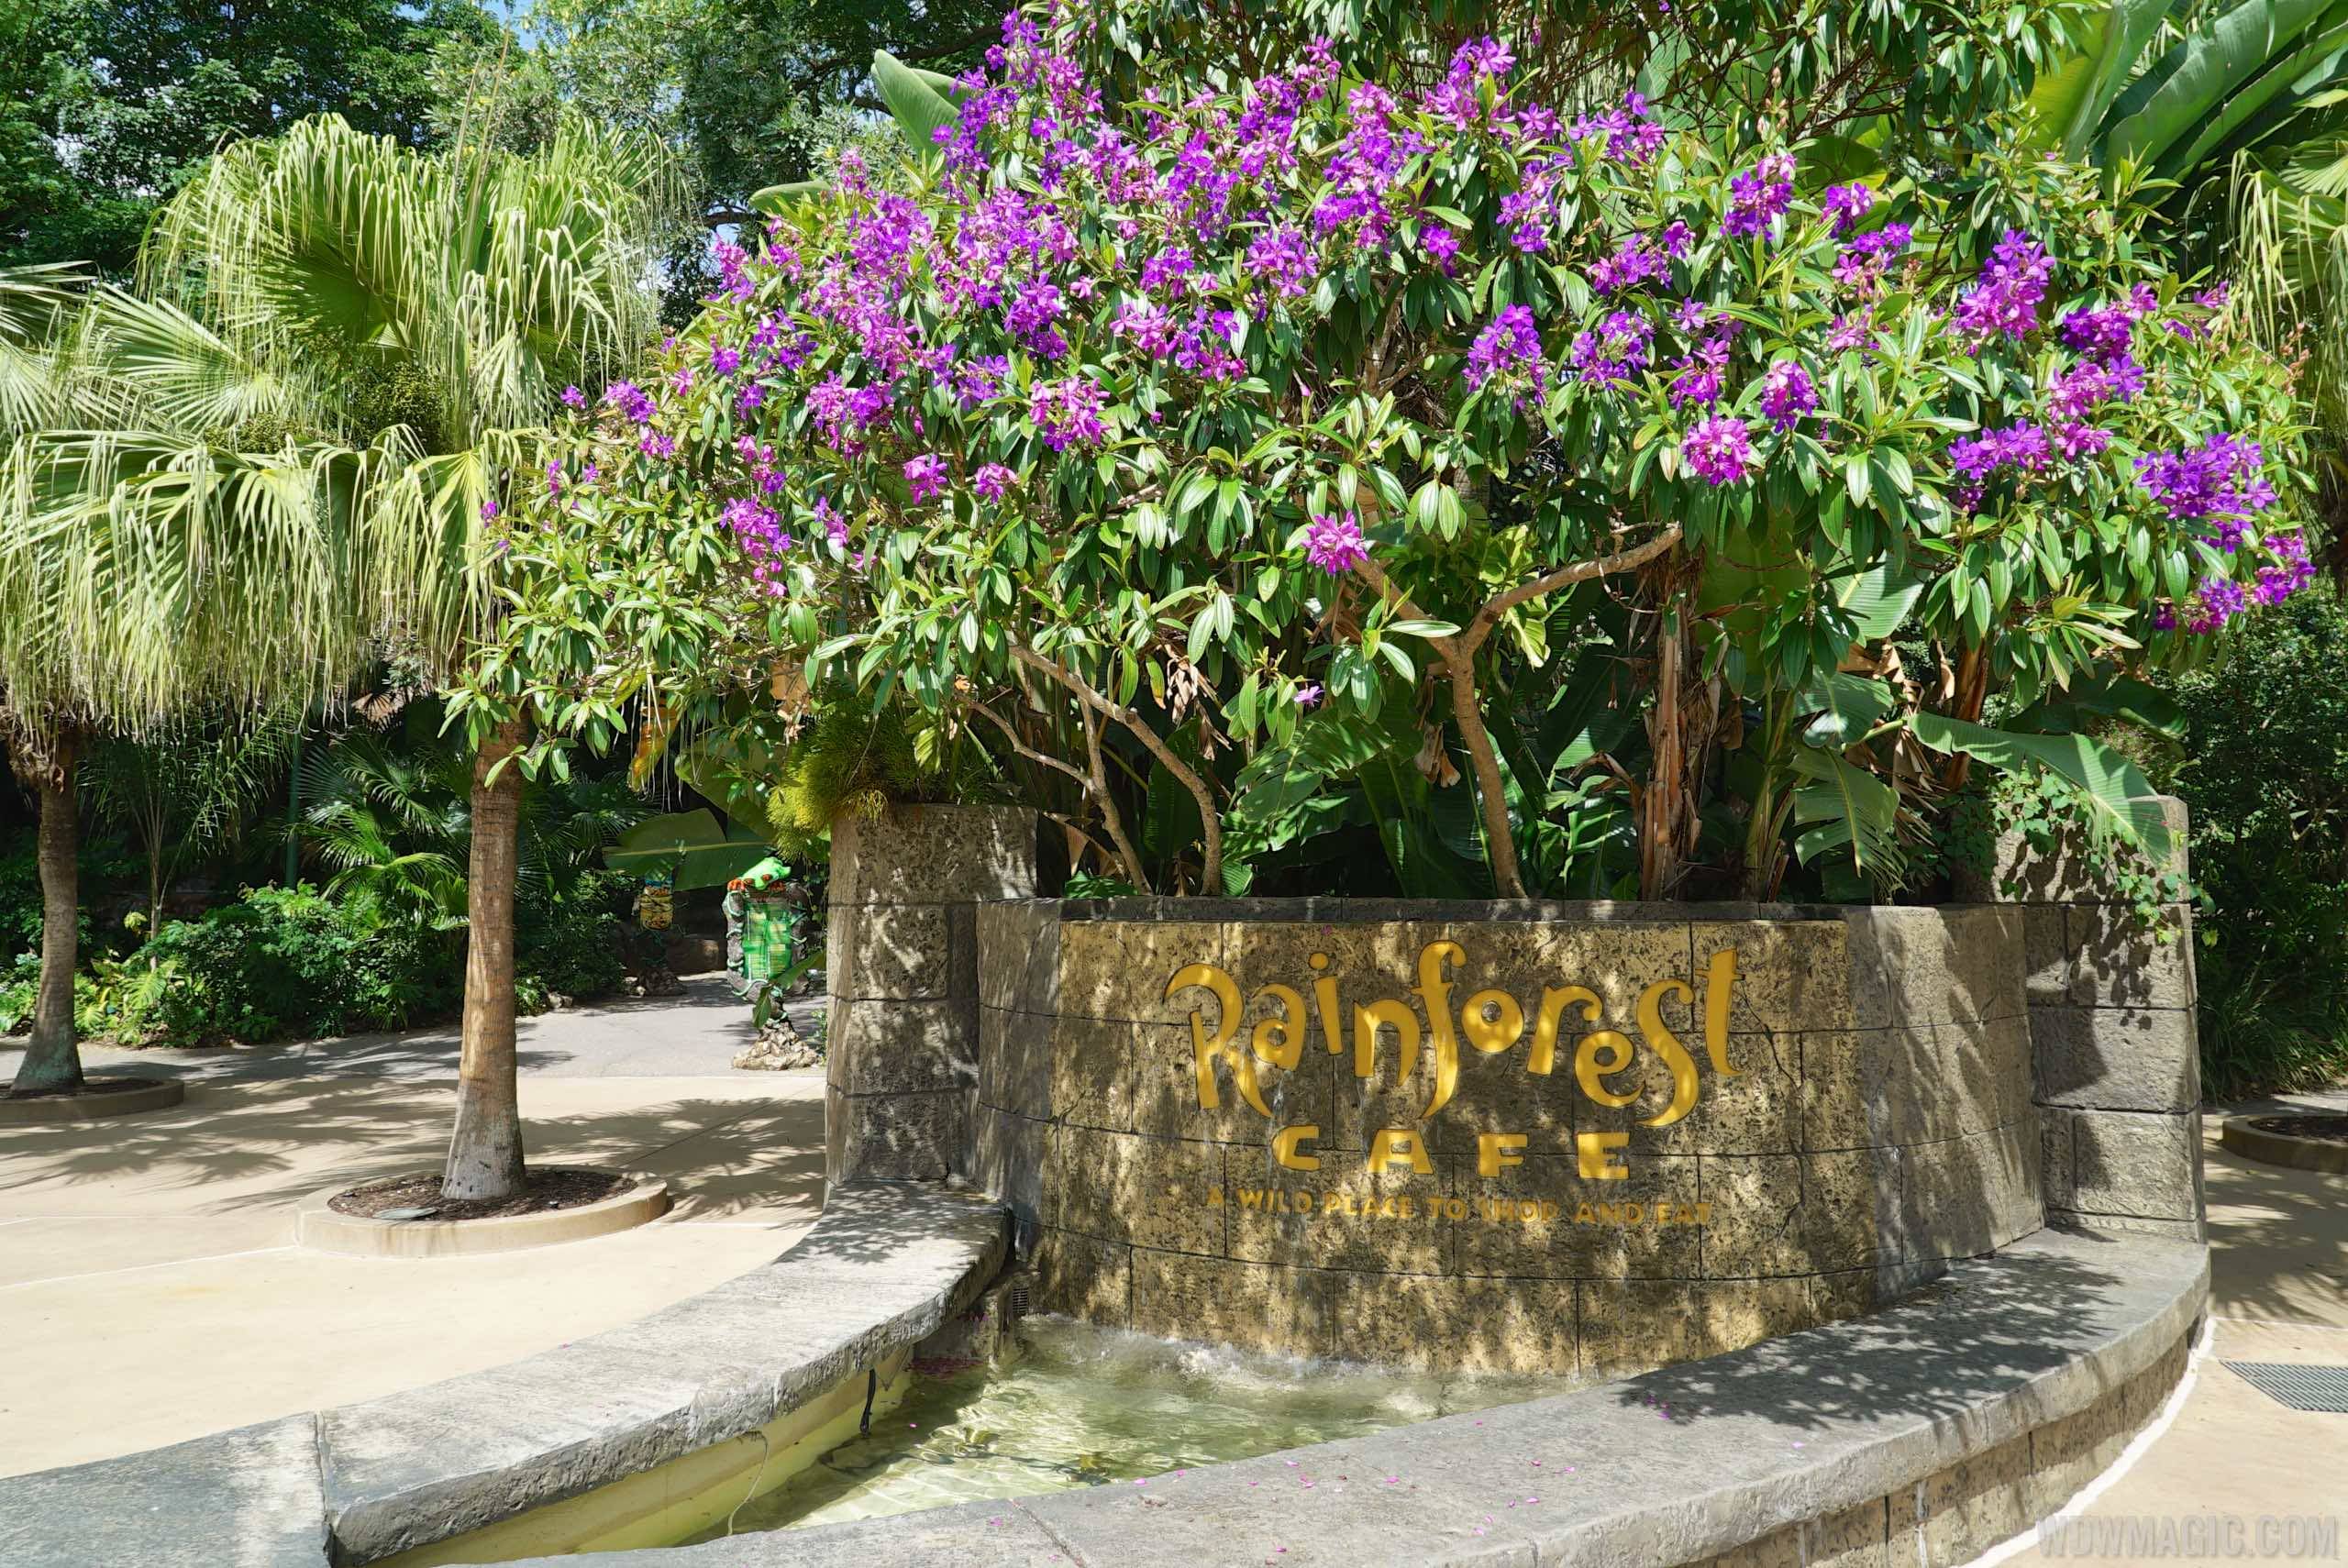 Rainforest Cafe - Main entrance